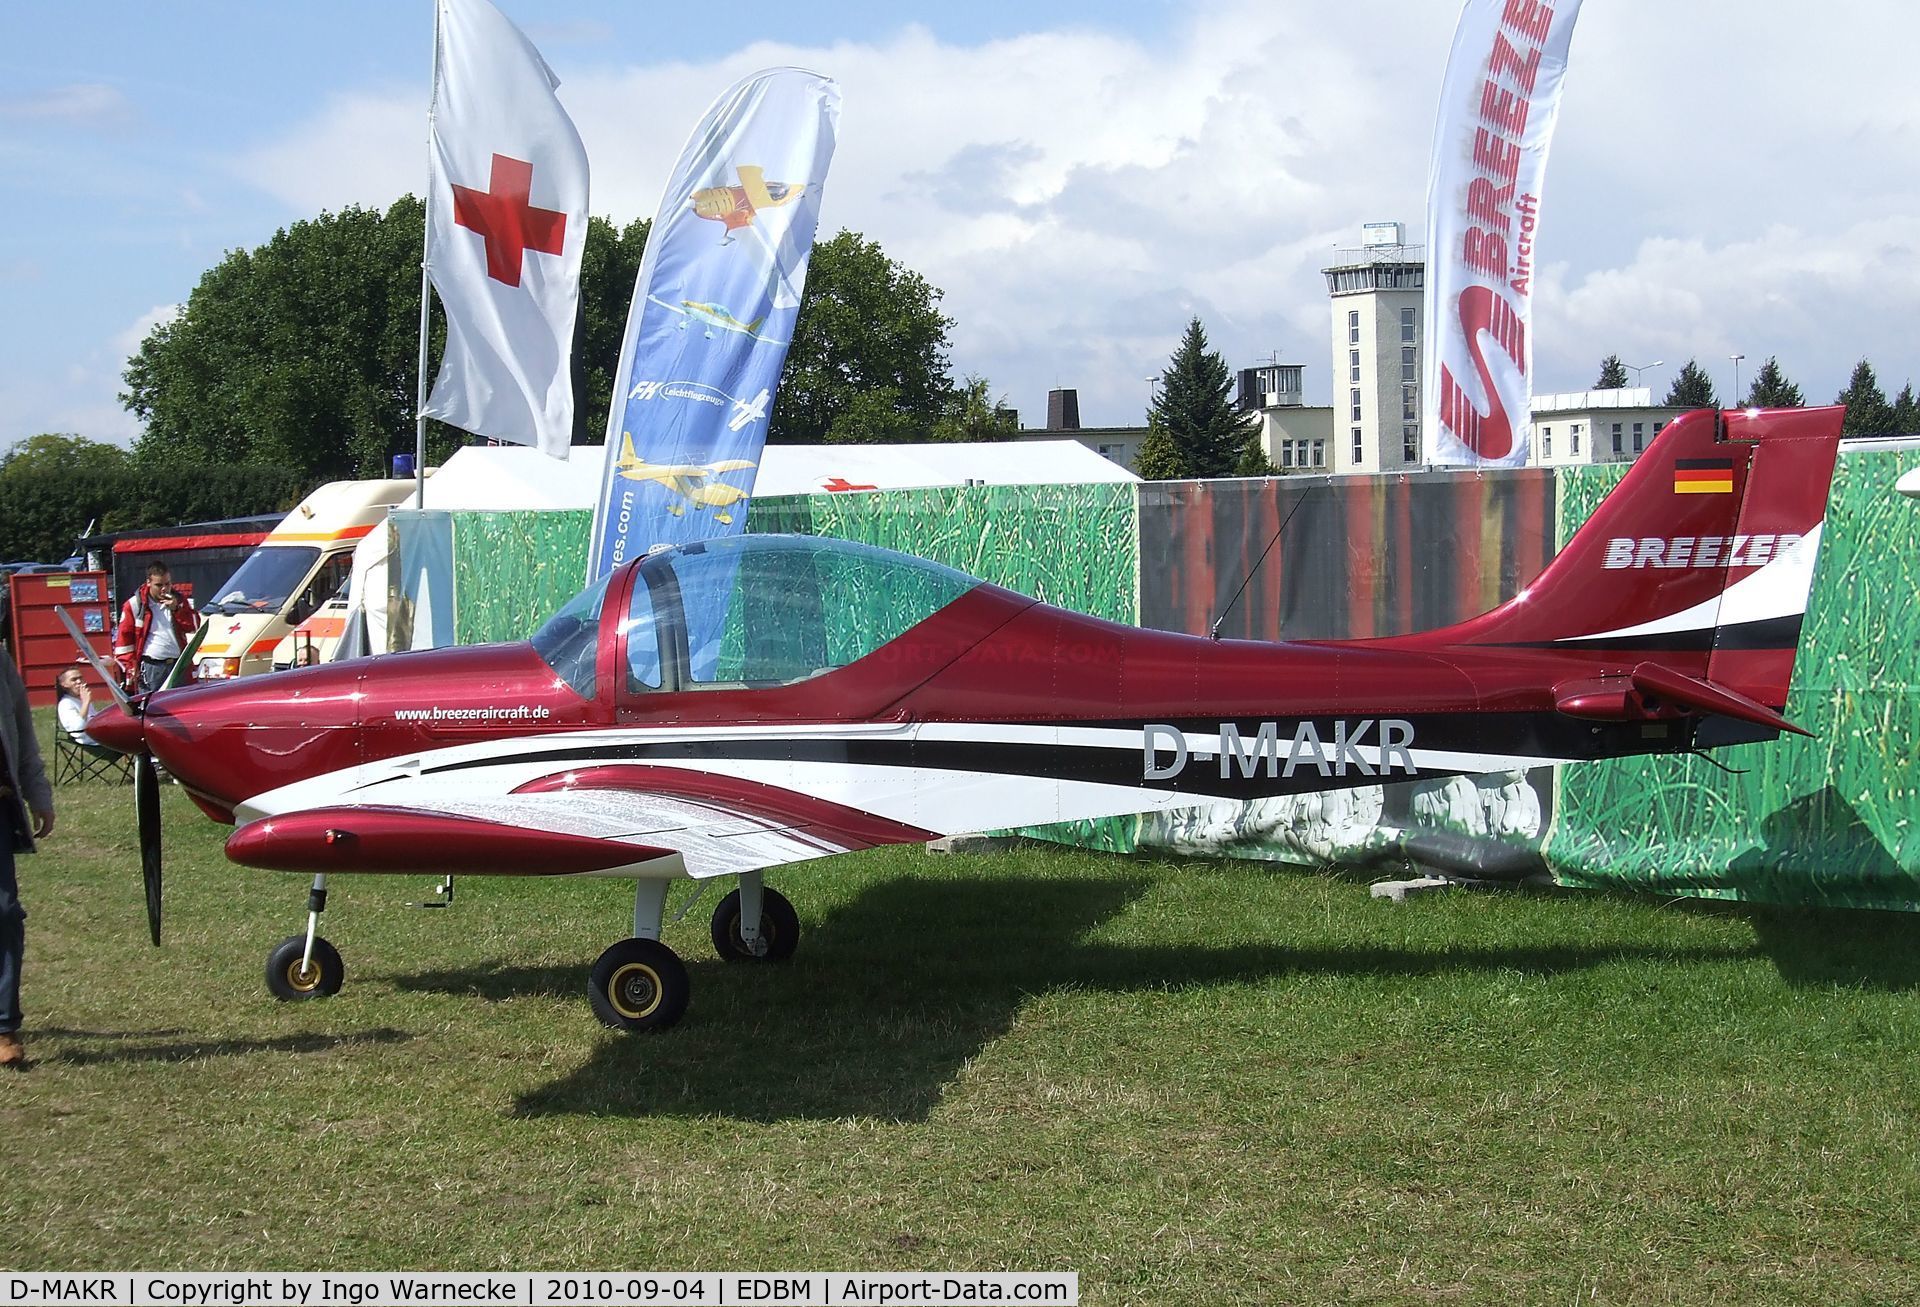 D-MAKR, Aerostyle Breezer C/N Not found D-MAKR, Aerostyle Breezer at the 2010 Air Magdeburg